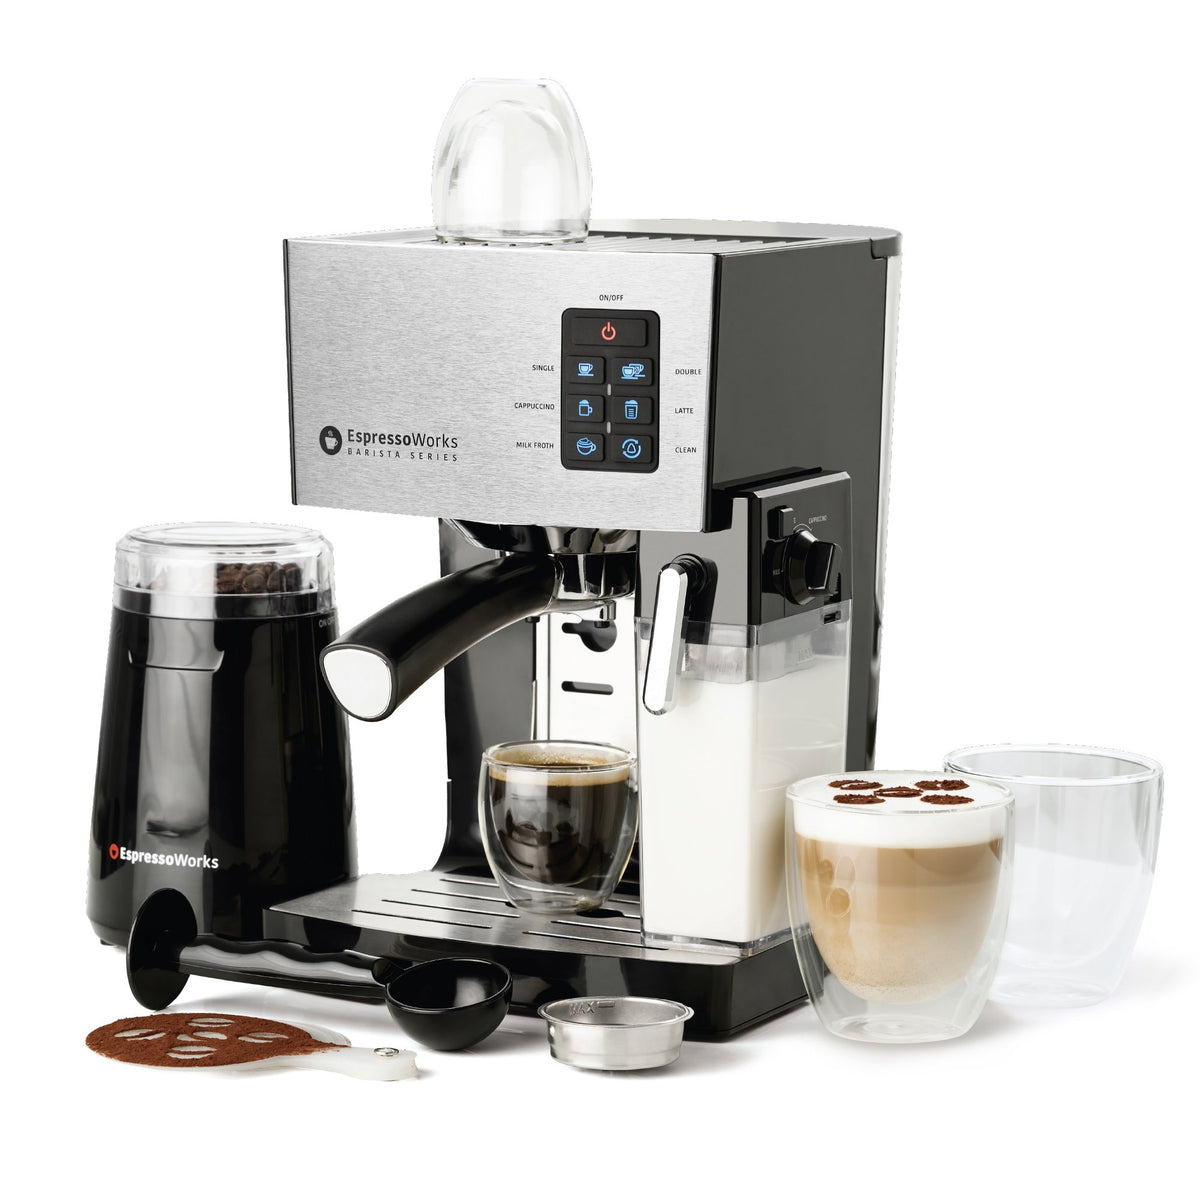 Replacement Milk Tank for the EspressoWorks 10pc 19-bar Espresso and Cappuccino Maker Set